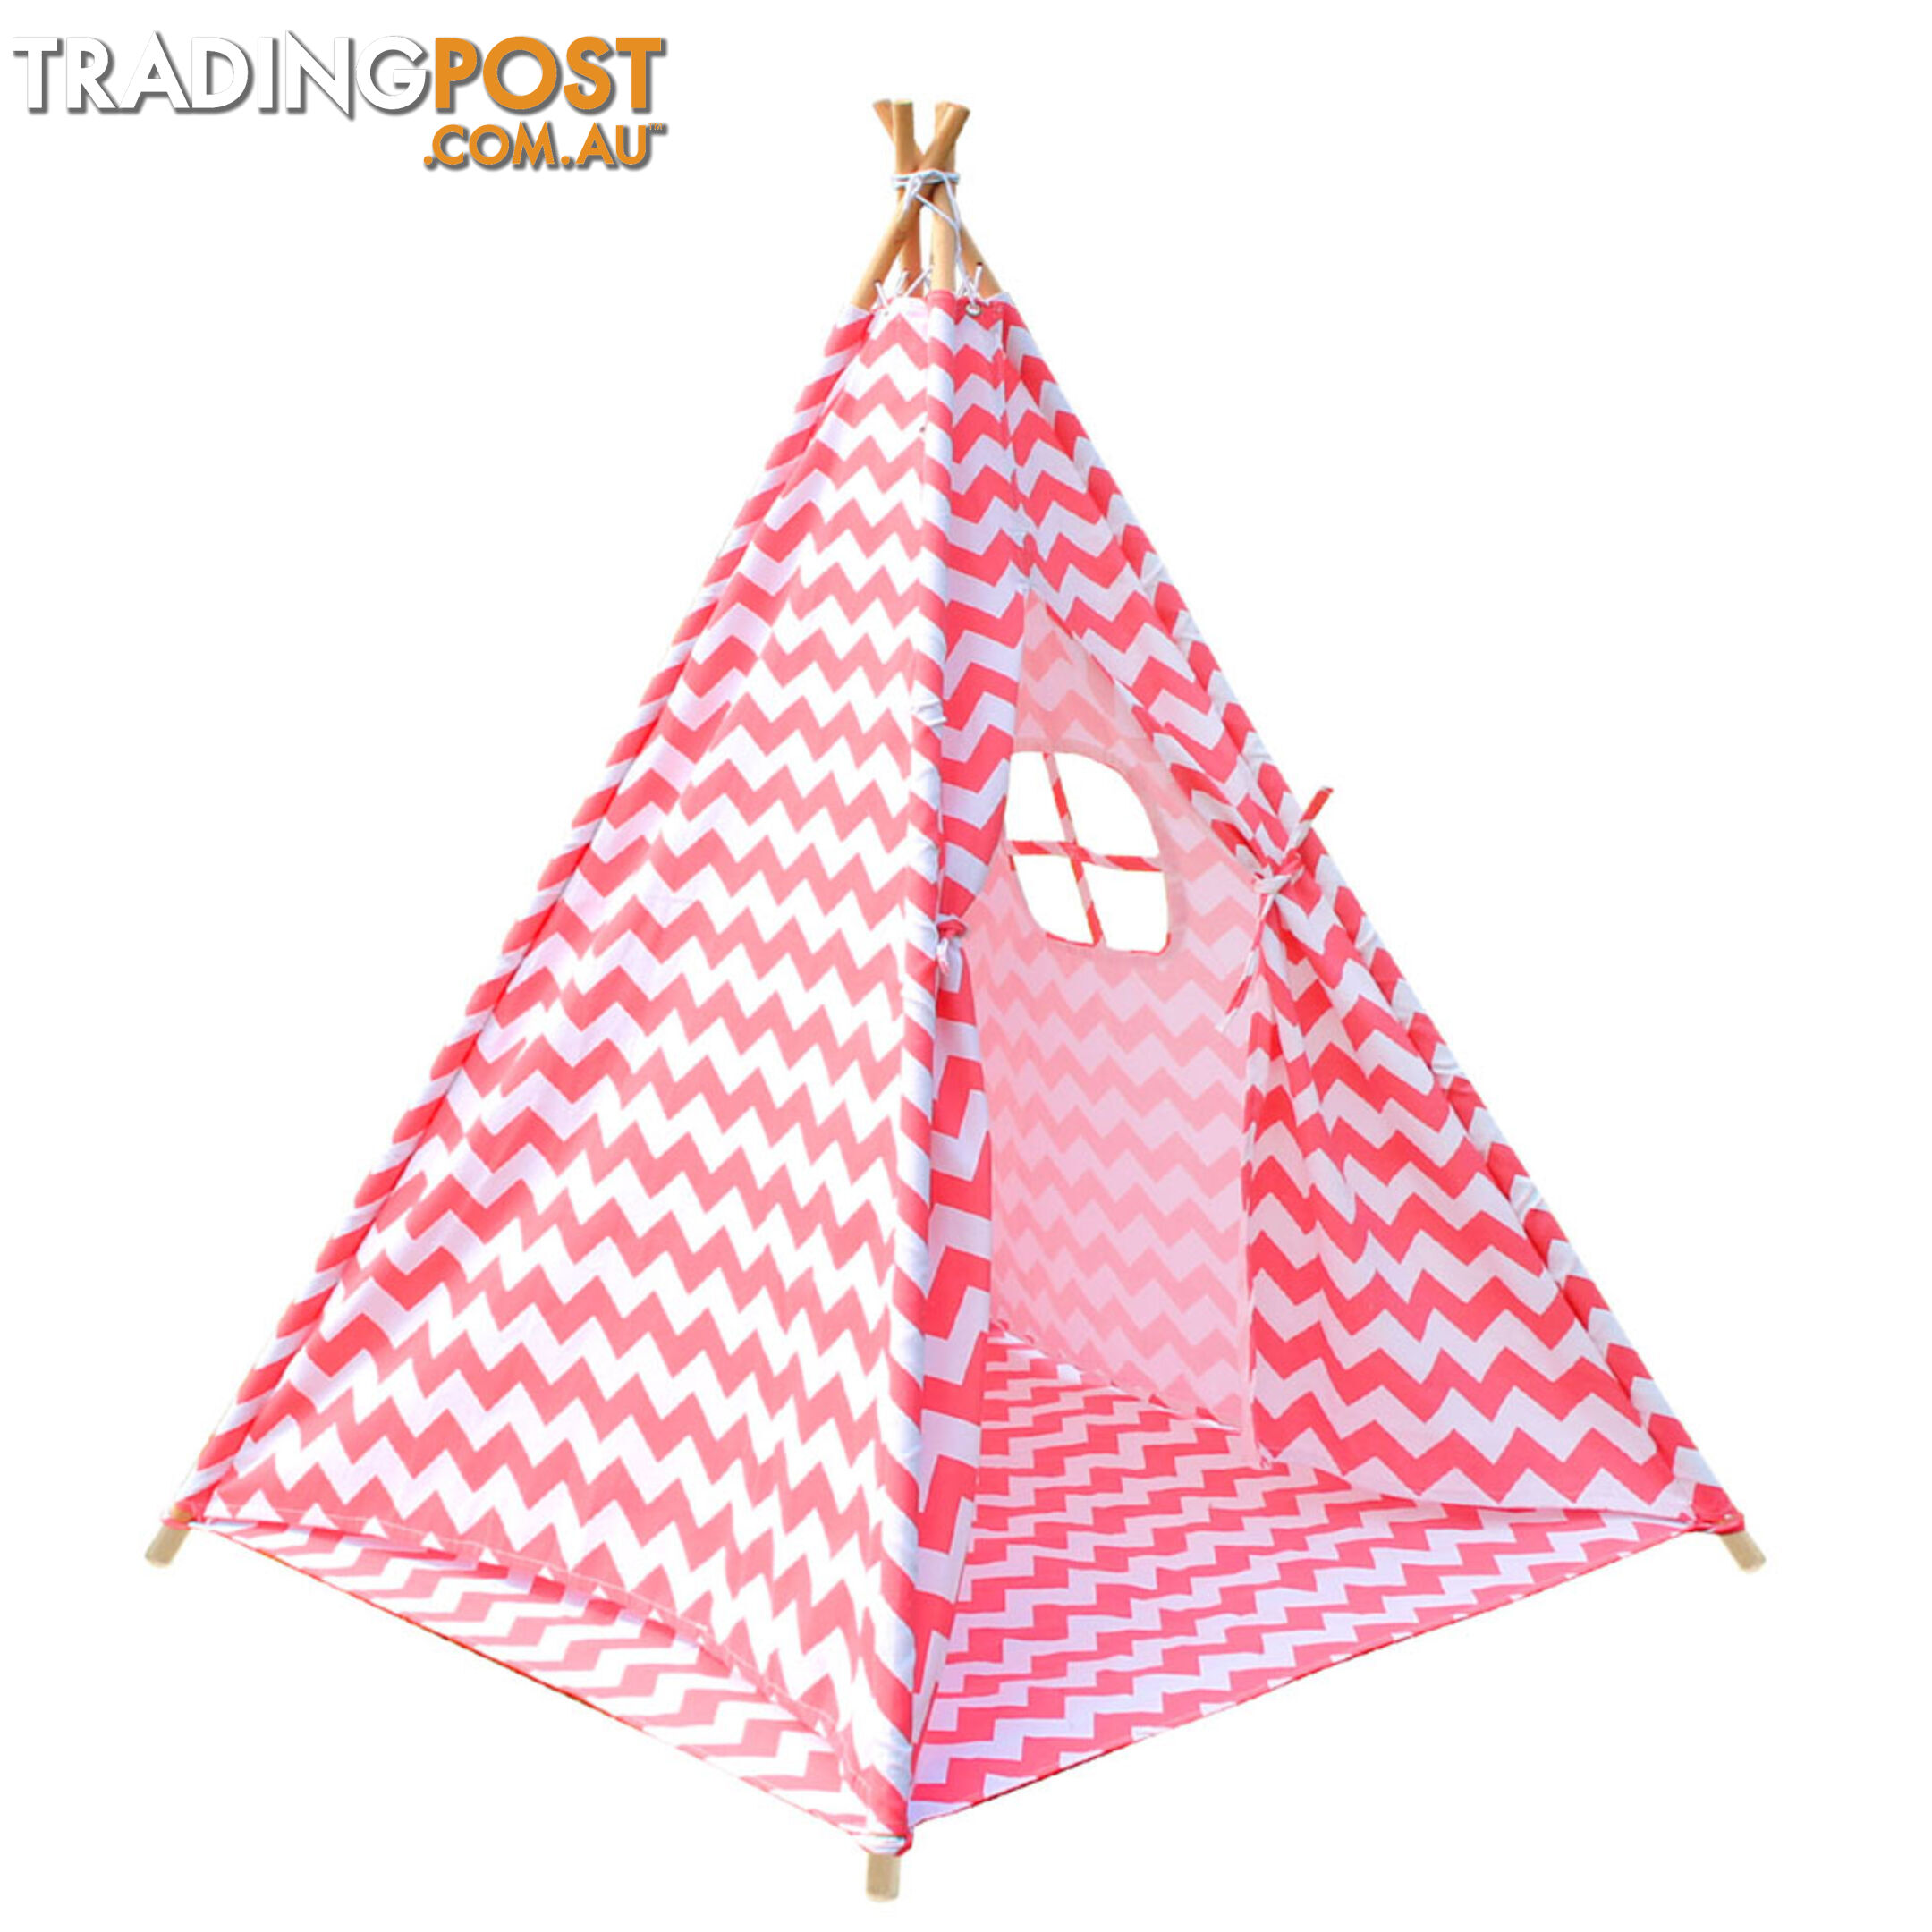 4 Poles Teepee Tent w/ Storage Bag Coral